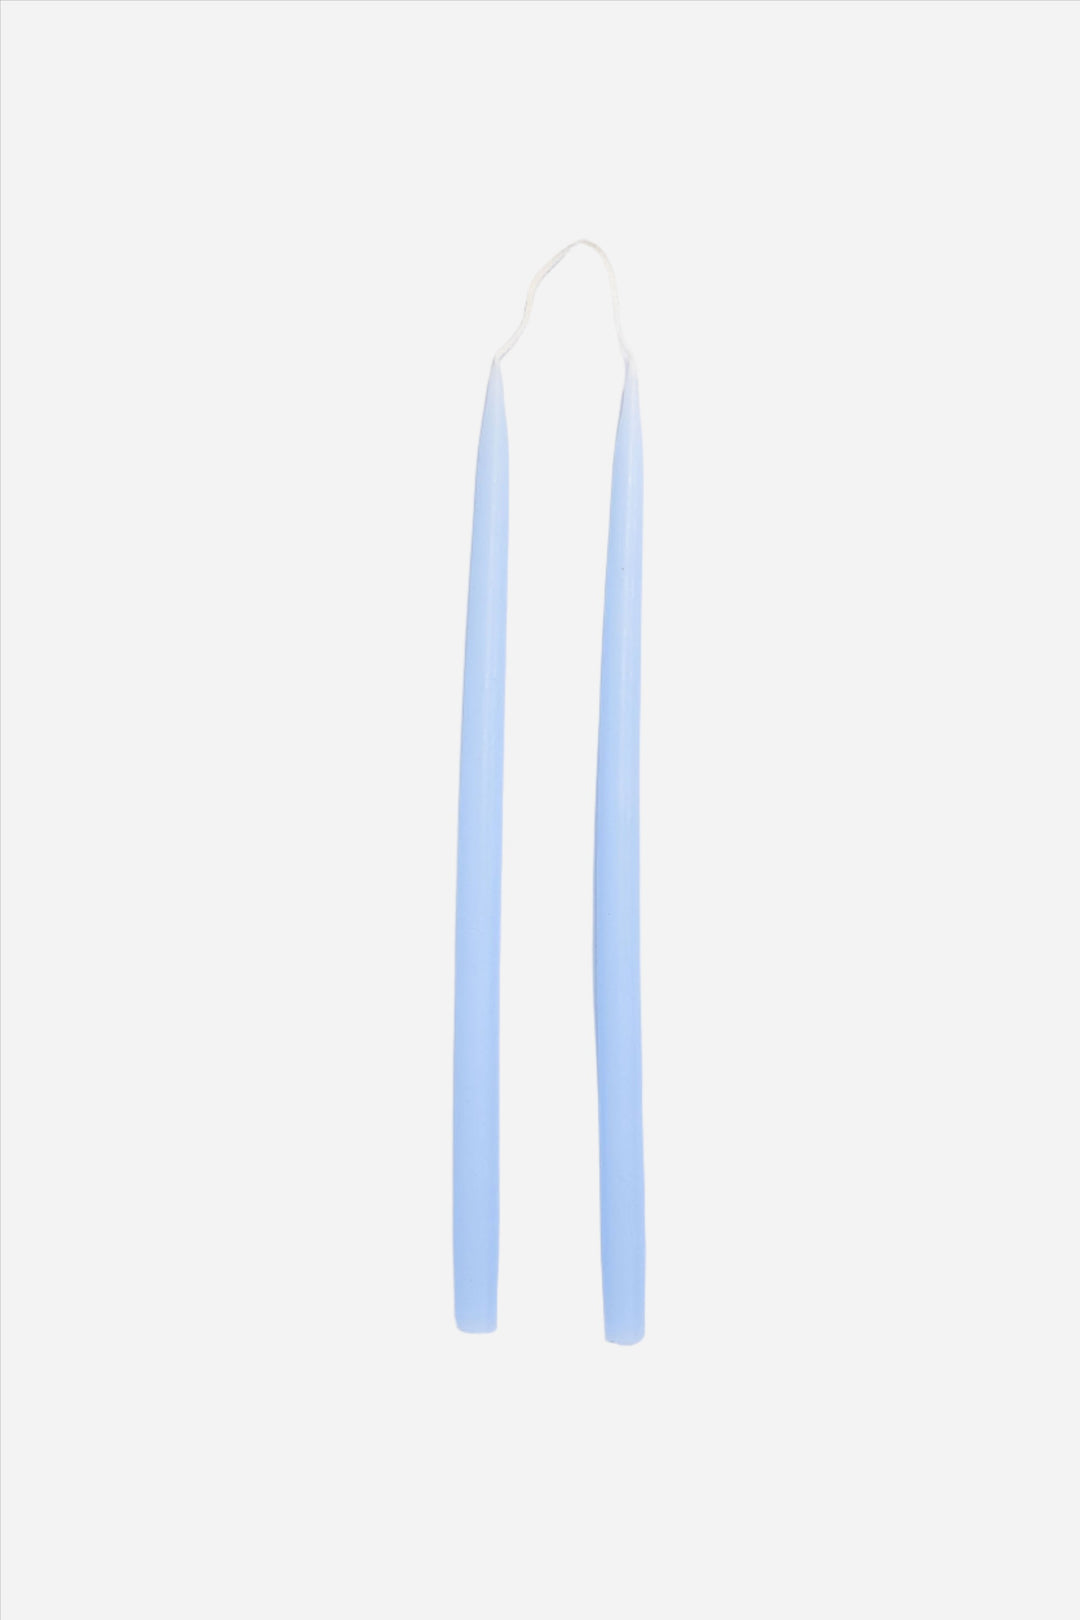 28cm  Pair of Candles / Pastel Blue